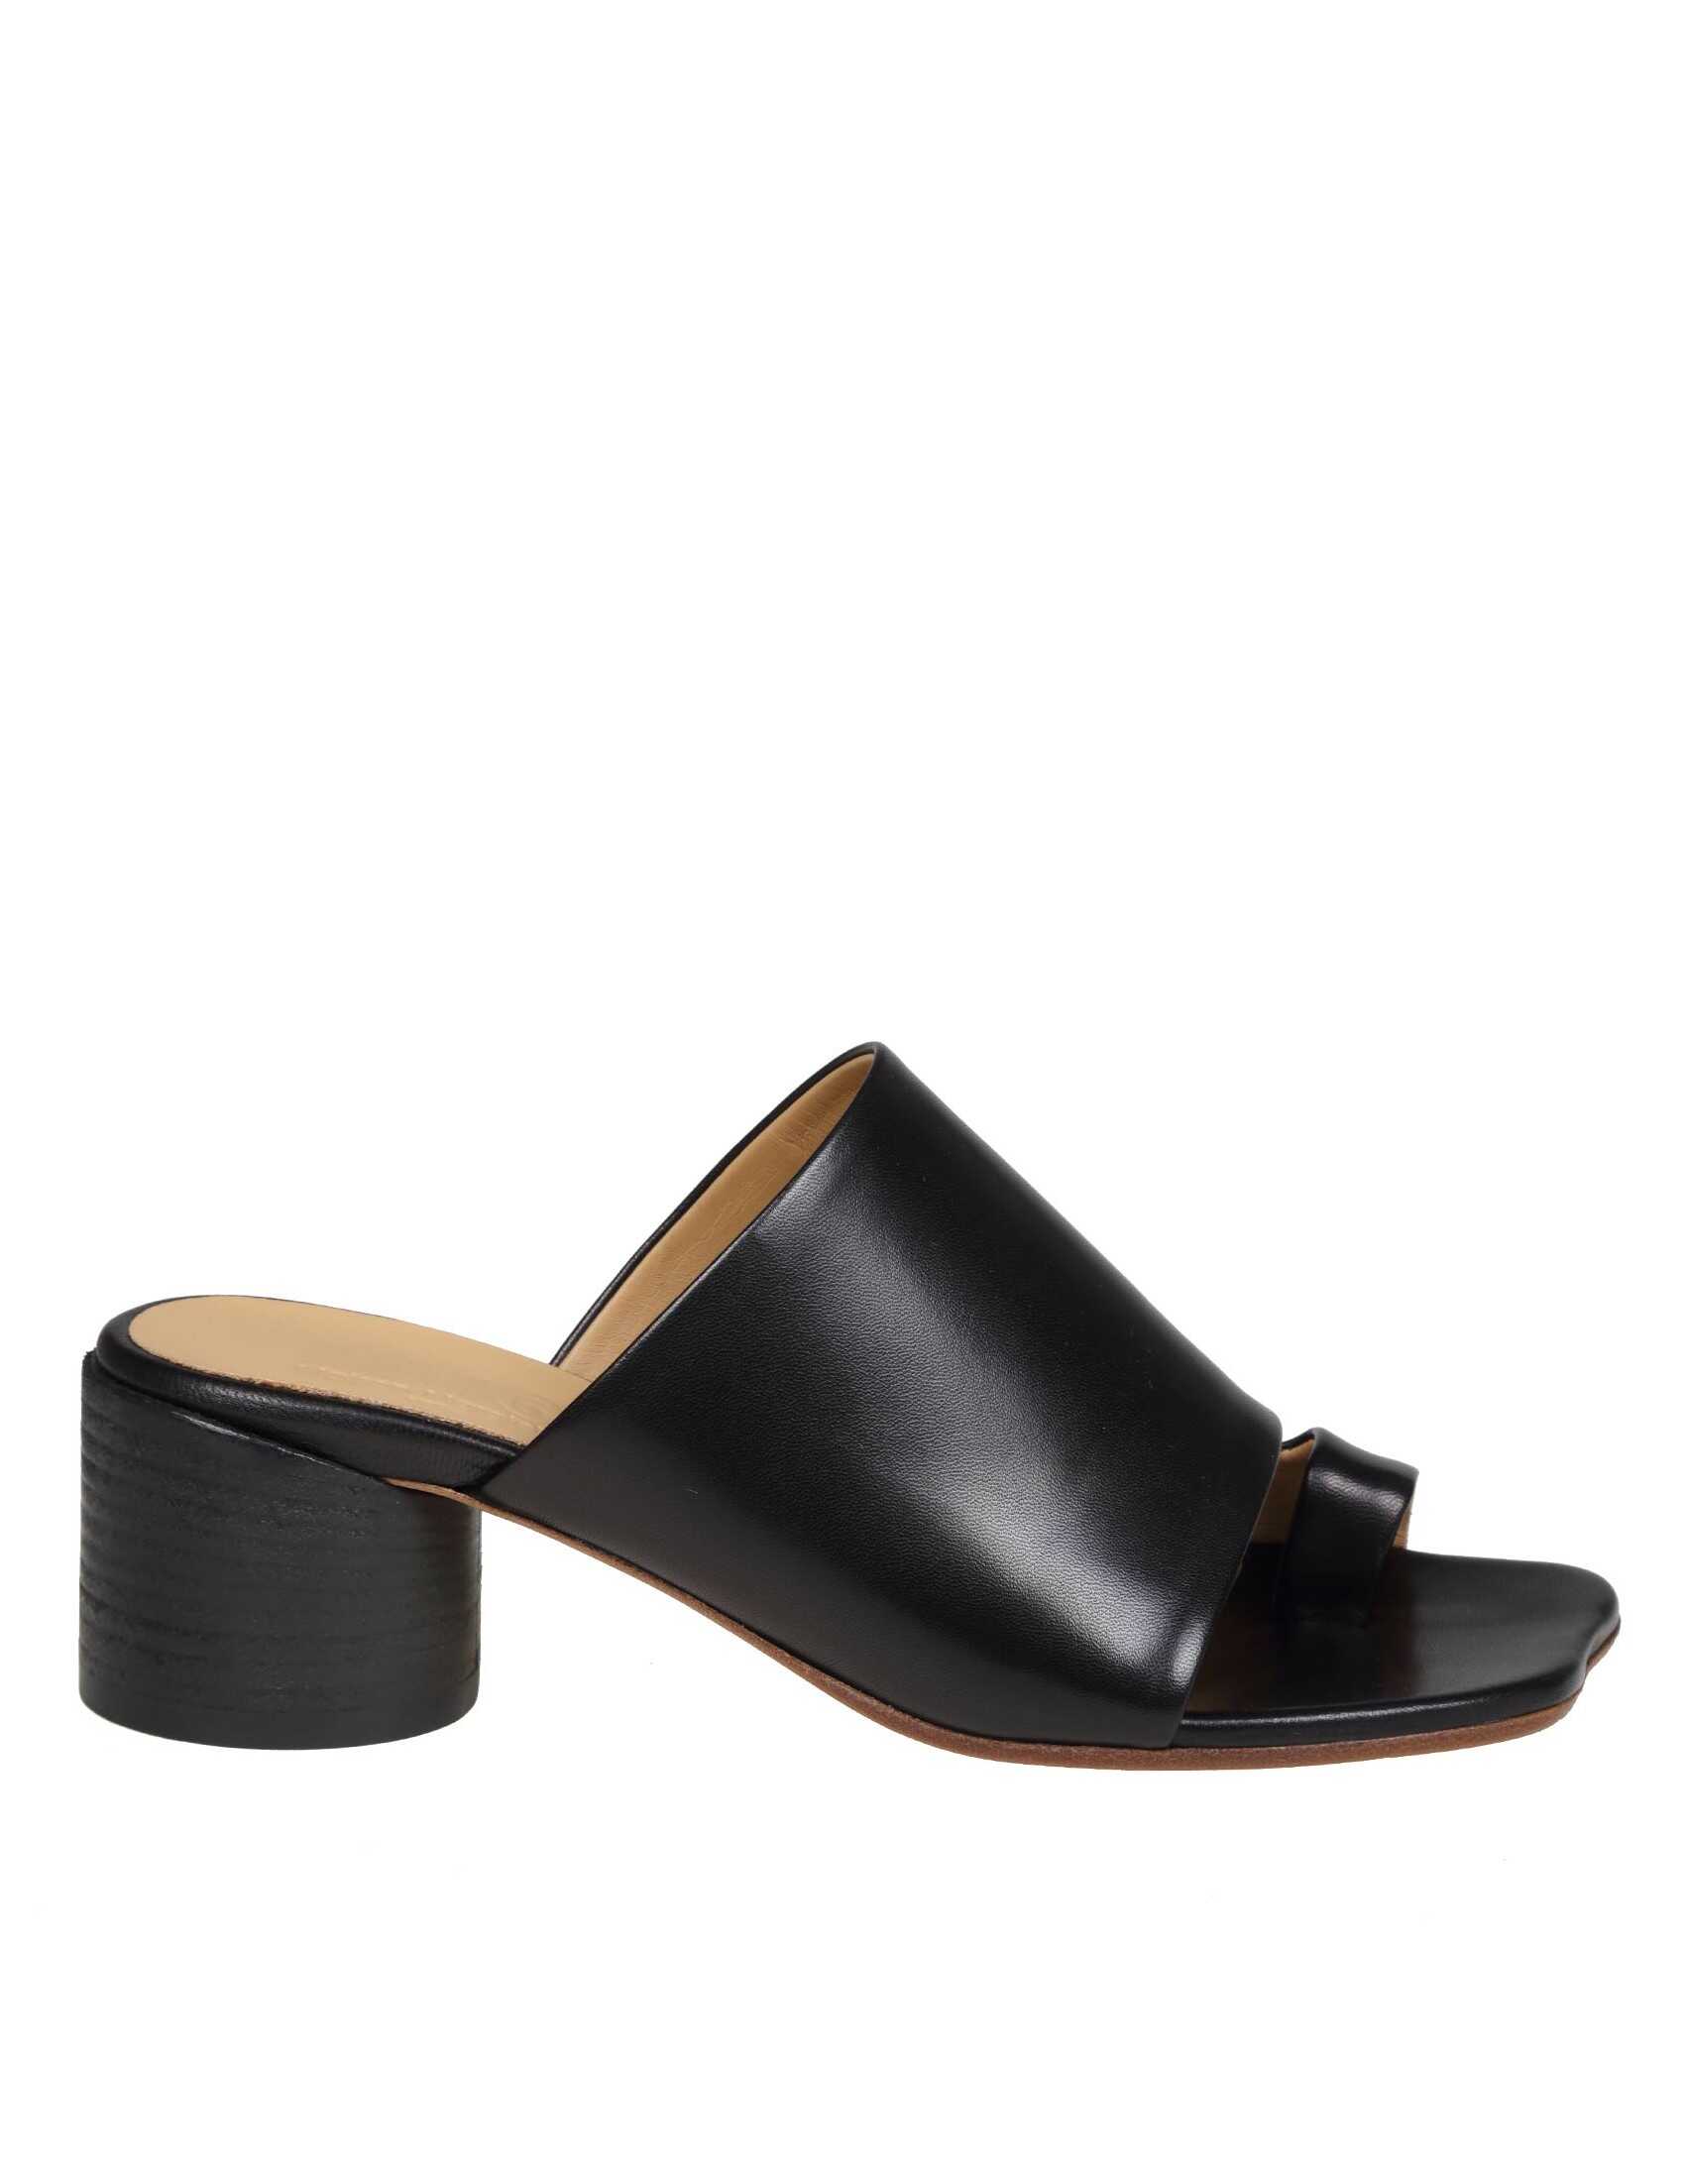 MM6 Maison Margiela Mm6 sandal in black leather Black image0